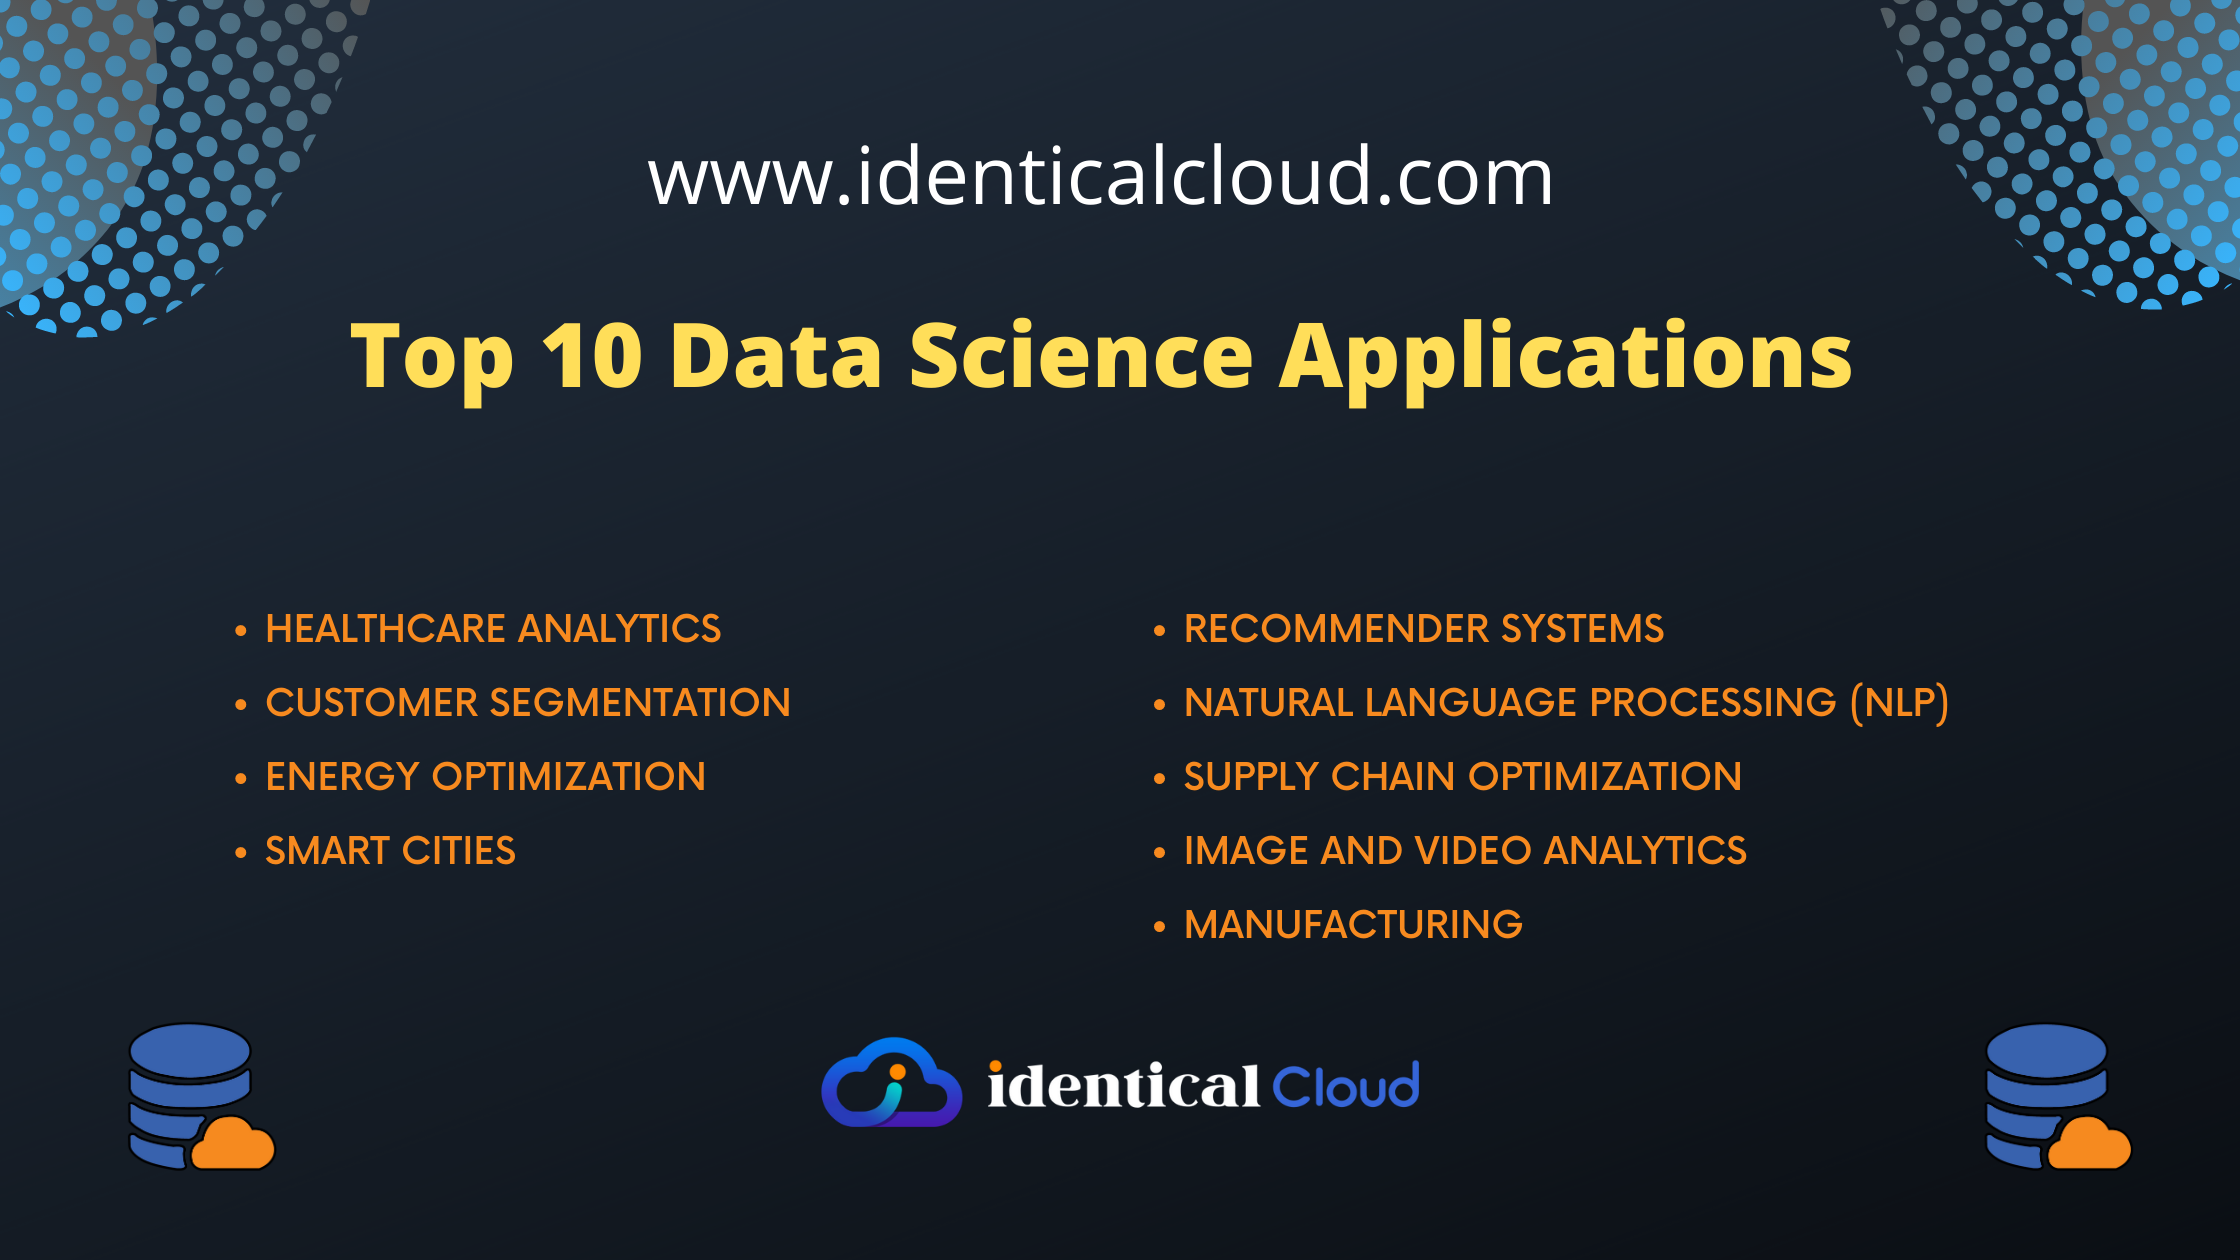 Top 10 Data Science Applications - identicalcloud.com